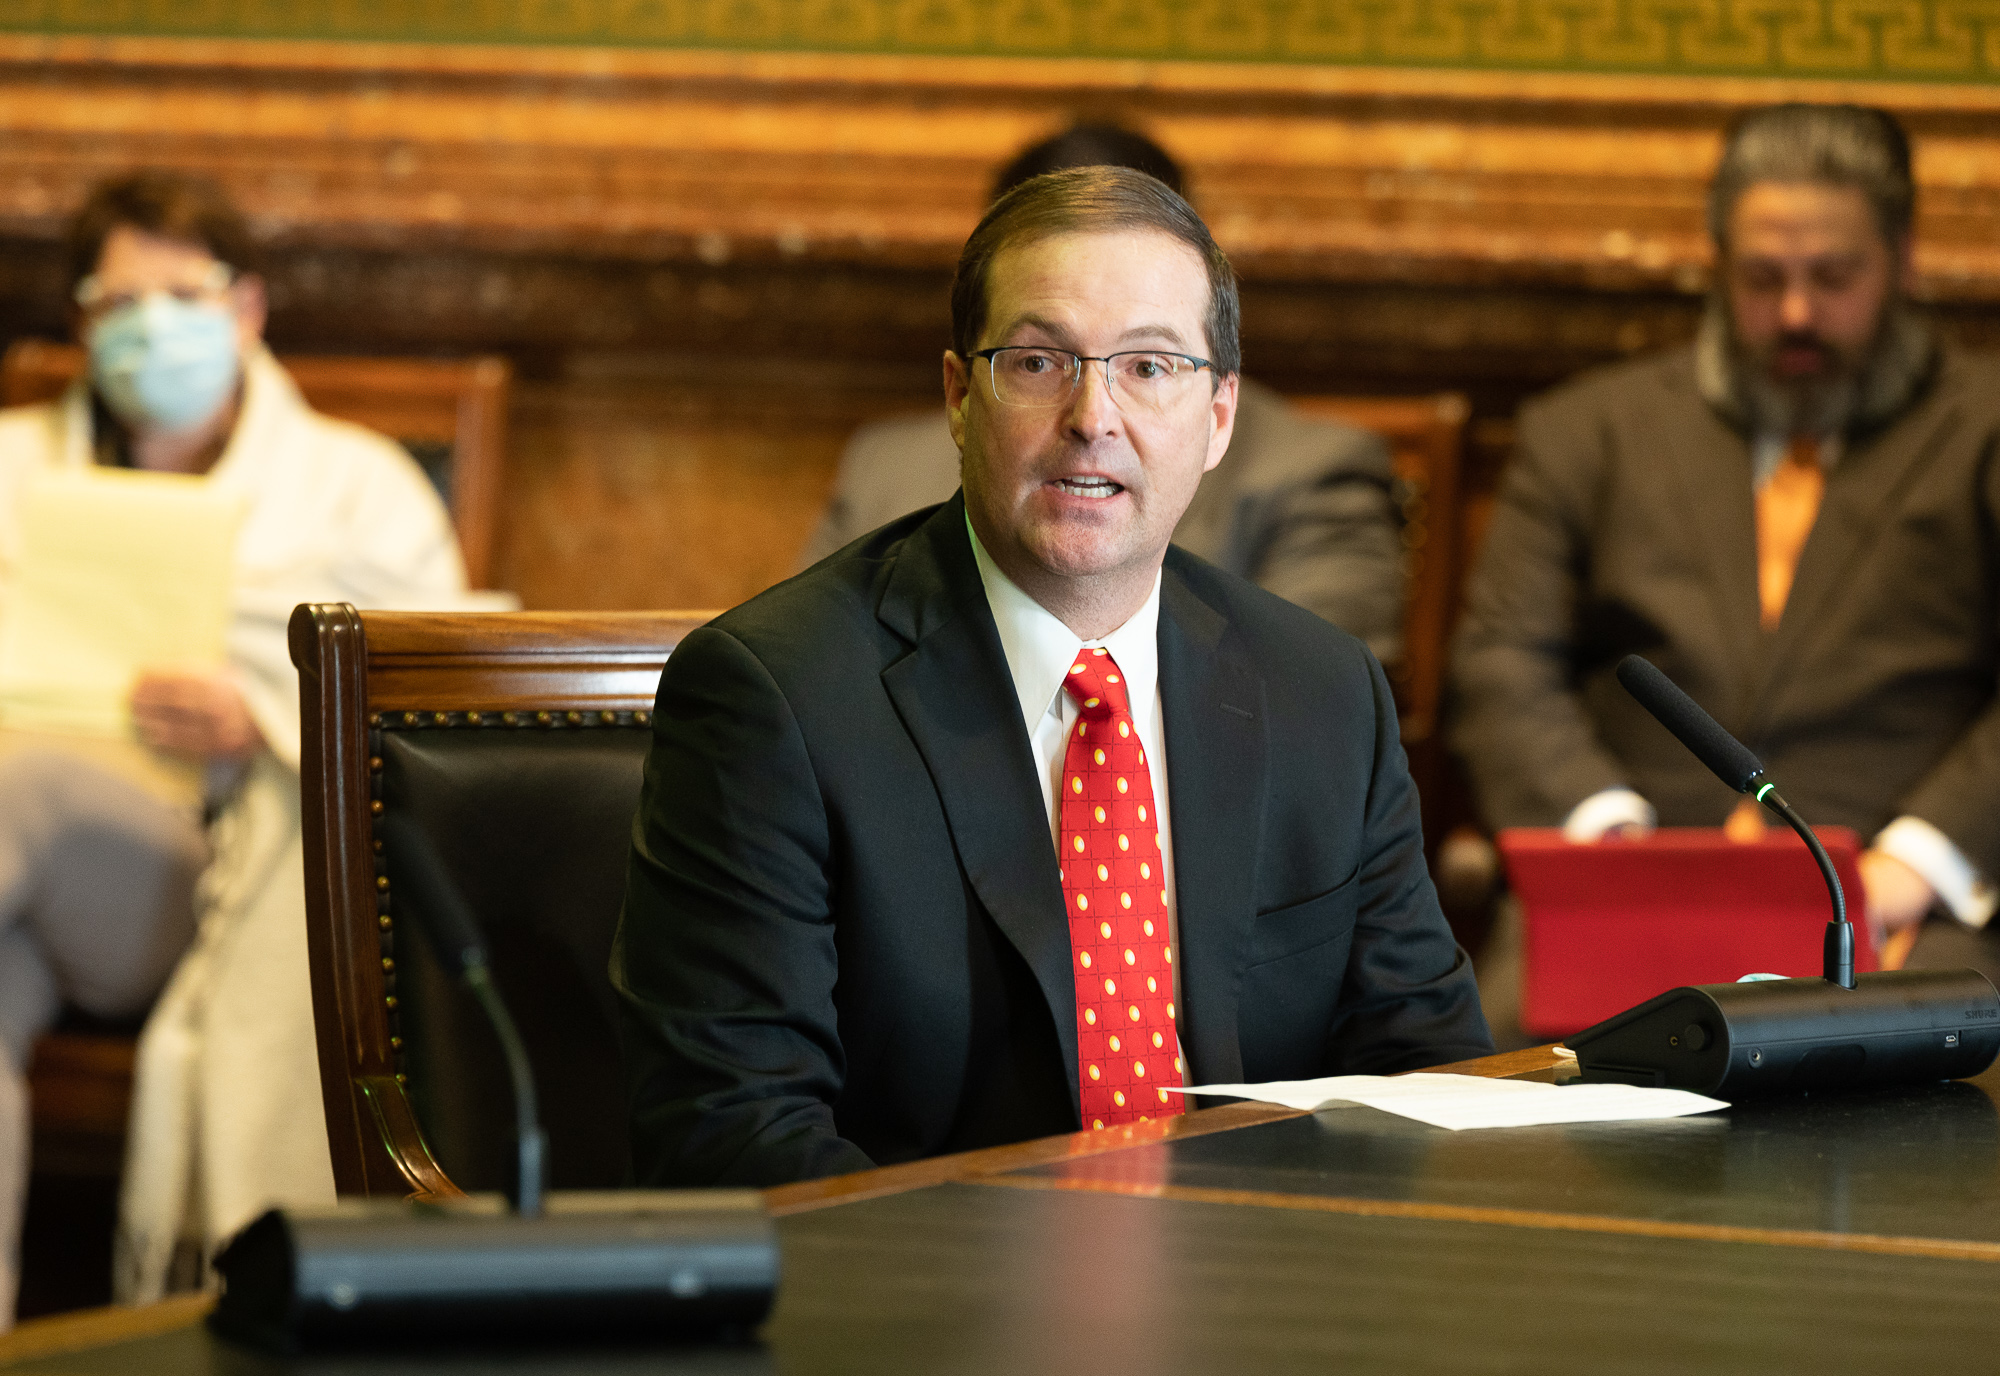 Jeff Jorgenson provides comments to Iowa legislators du